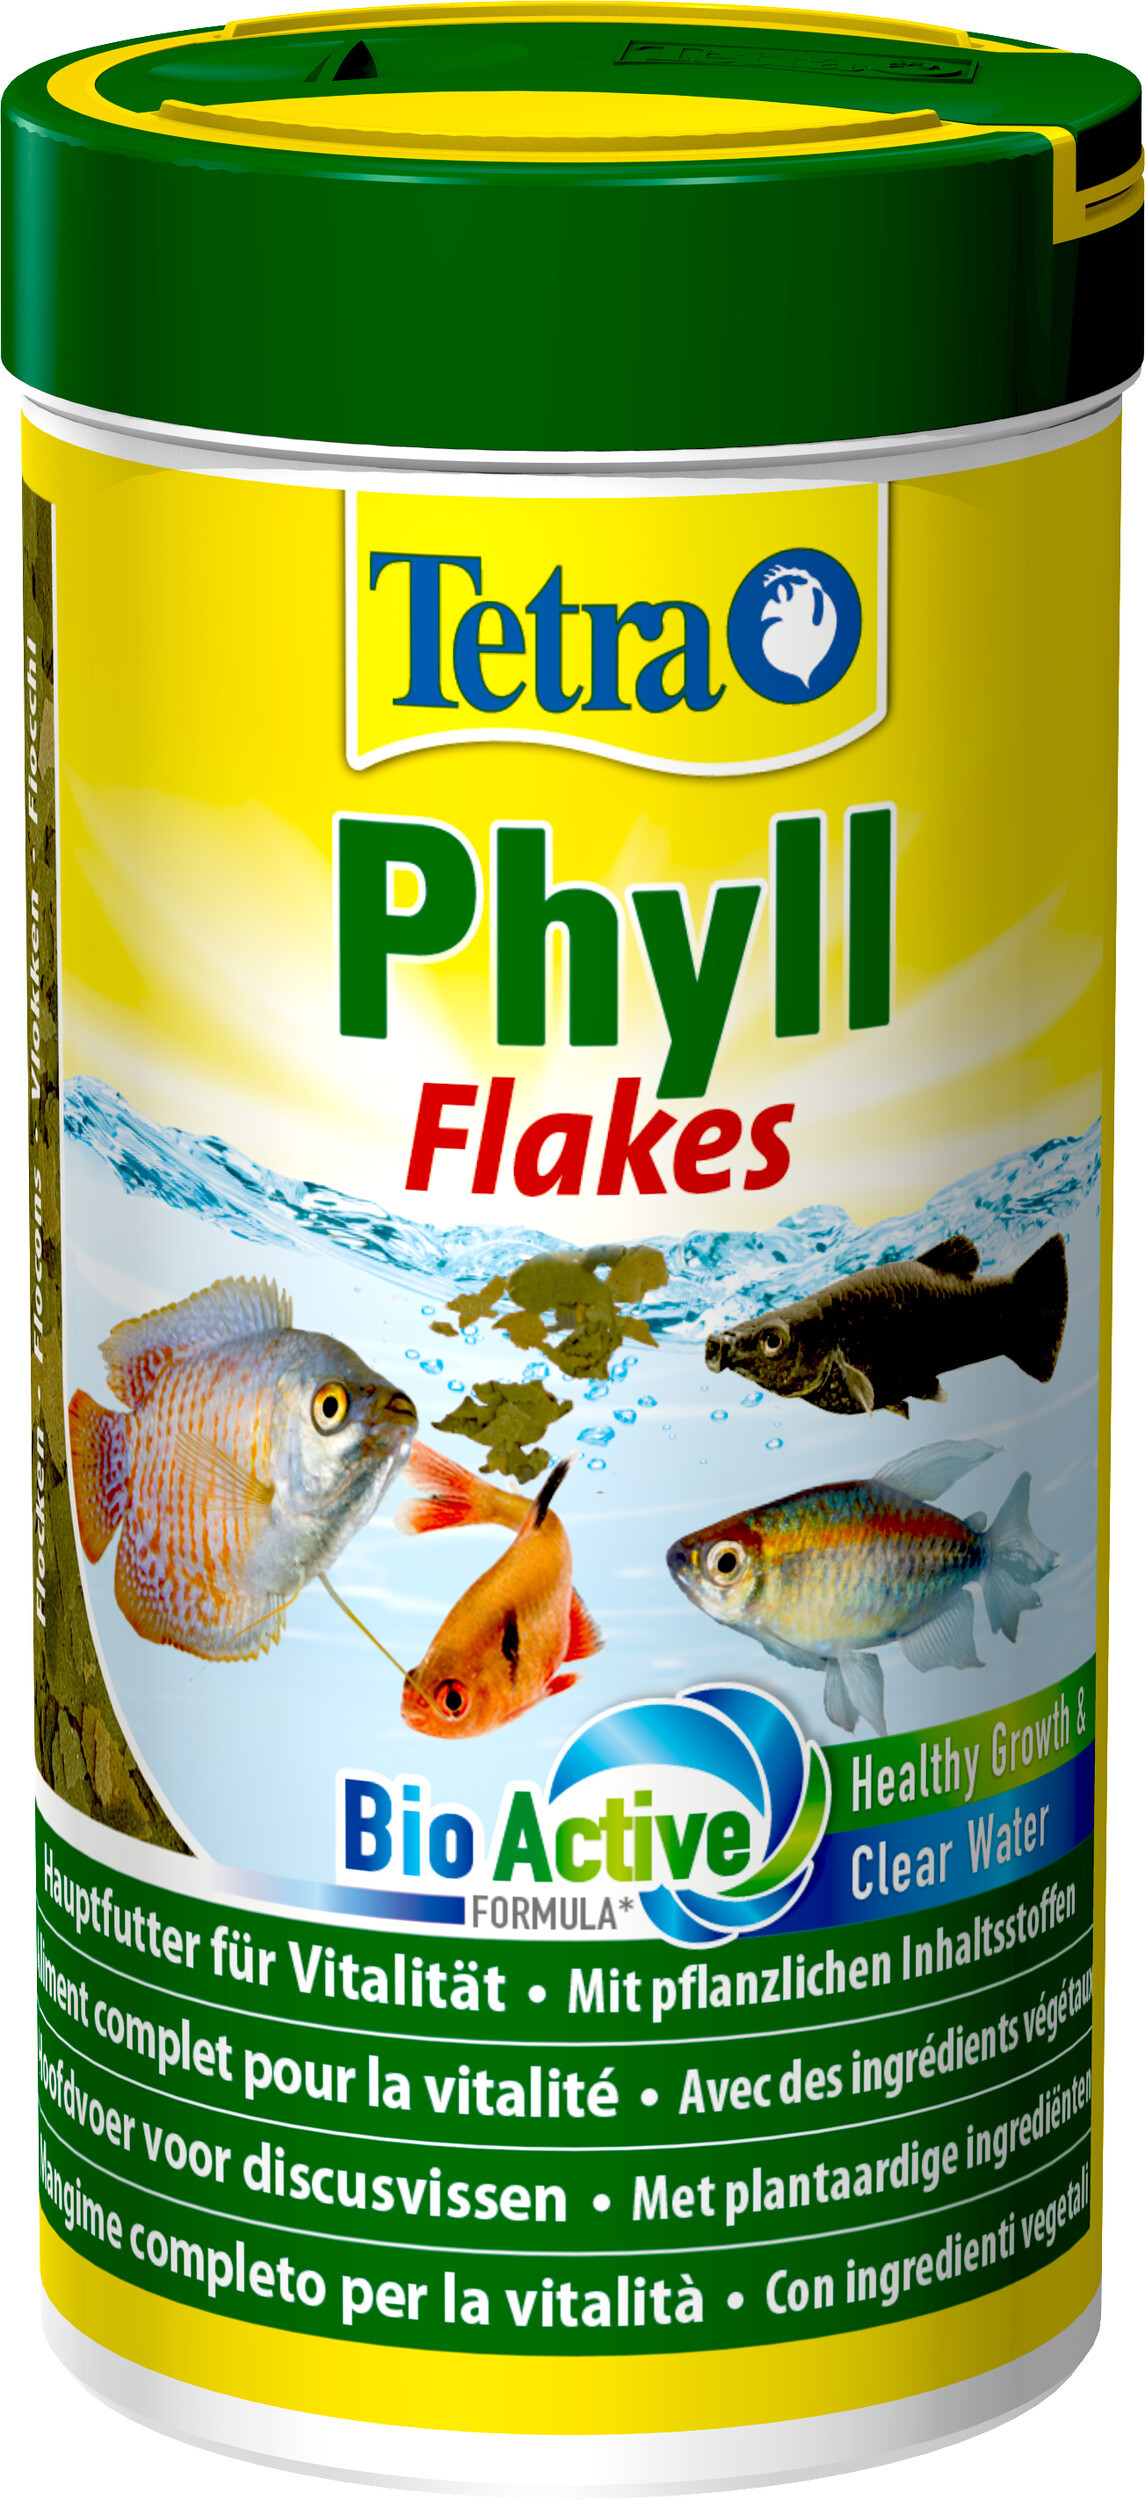 Tetra+Phyli+Flakes